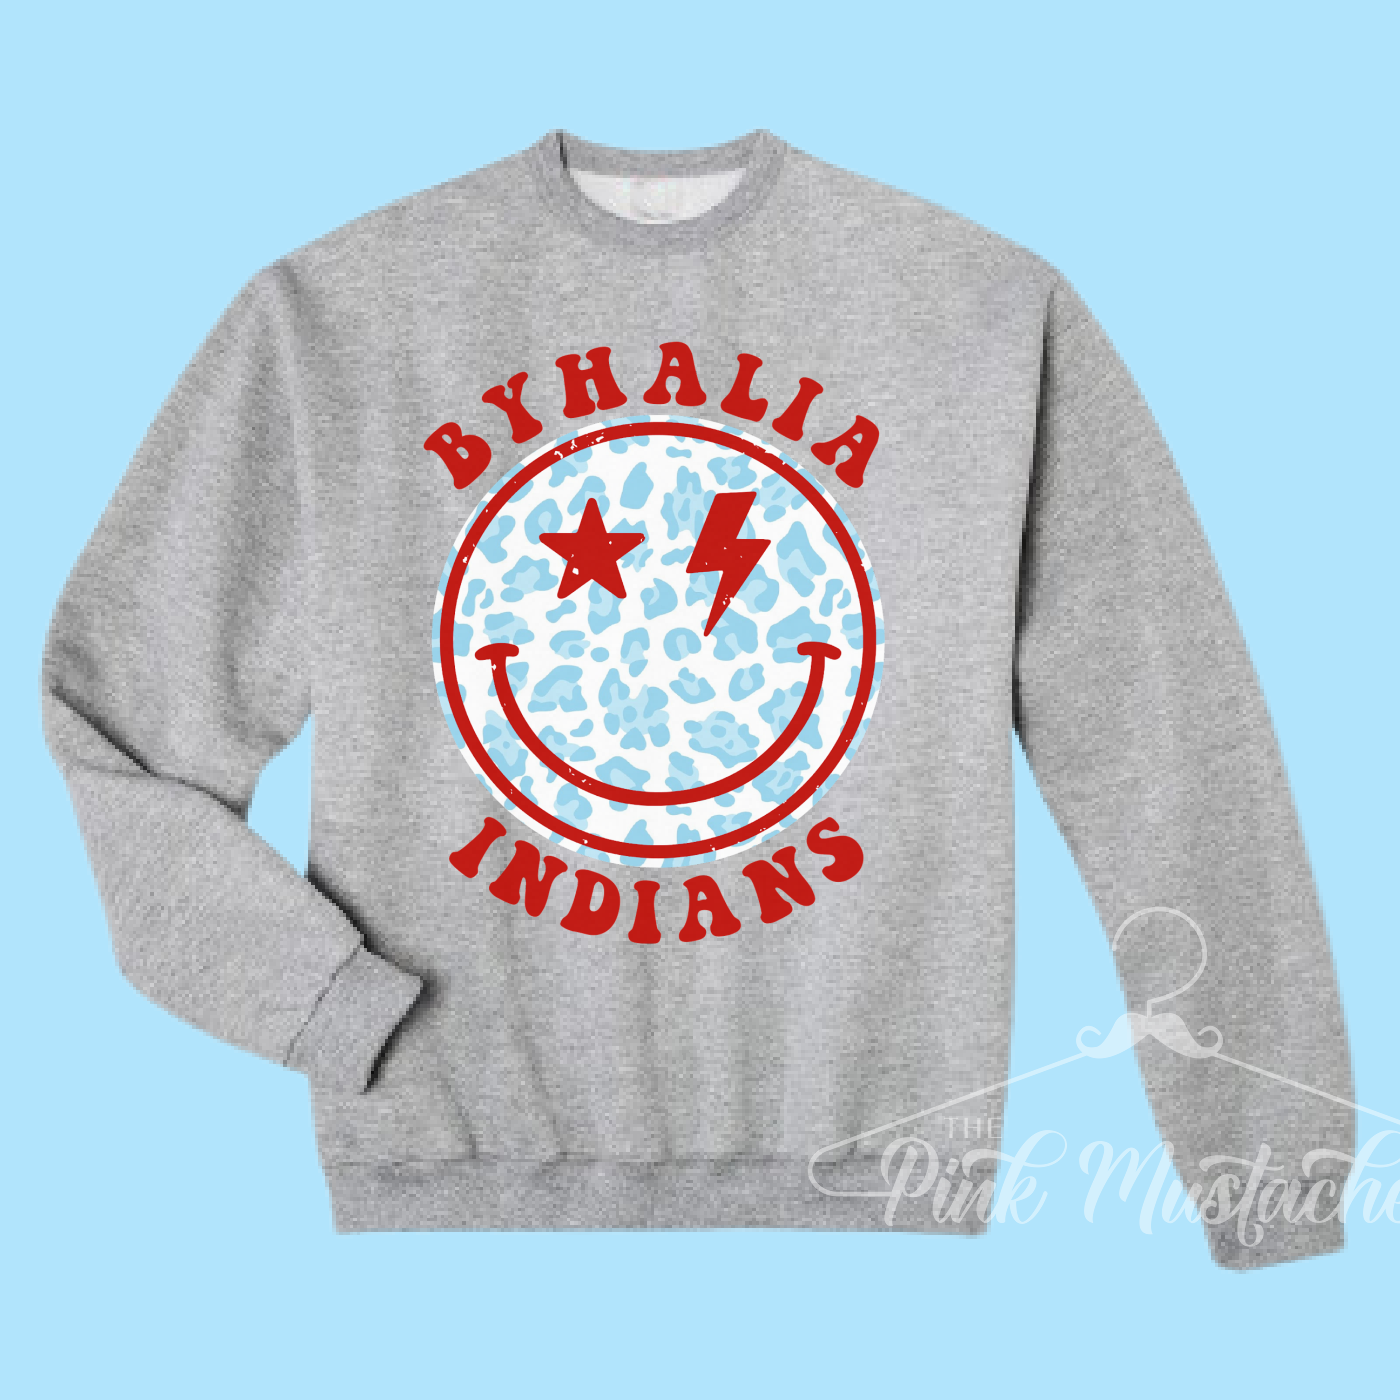 Byhalia Indians Distressed Smiley Unisex Sweatshirt / Toddler, Youth, and Adult Sizes/ Lewisburg -Desoto County Schools / Mississippi School Shirt